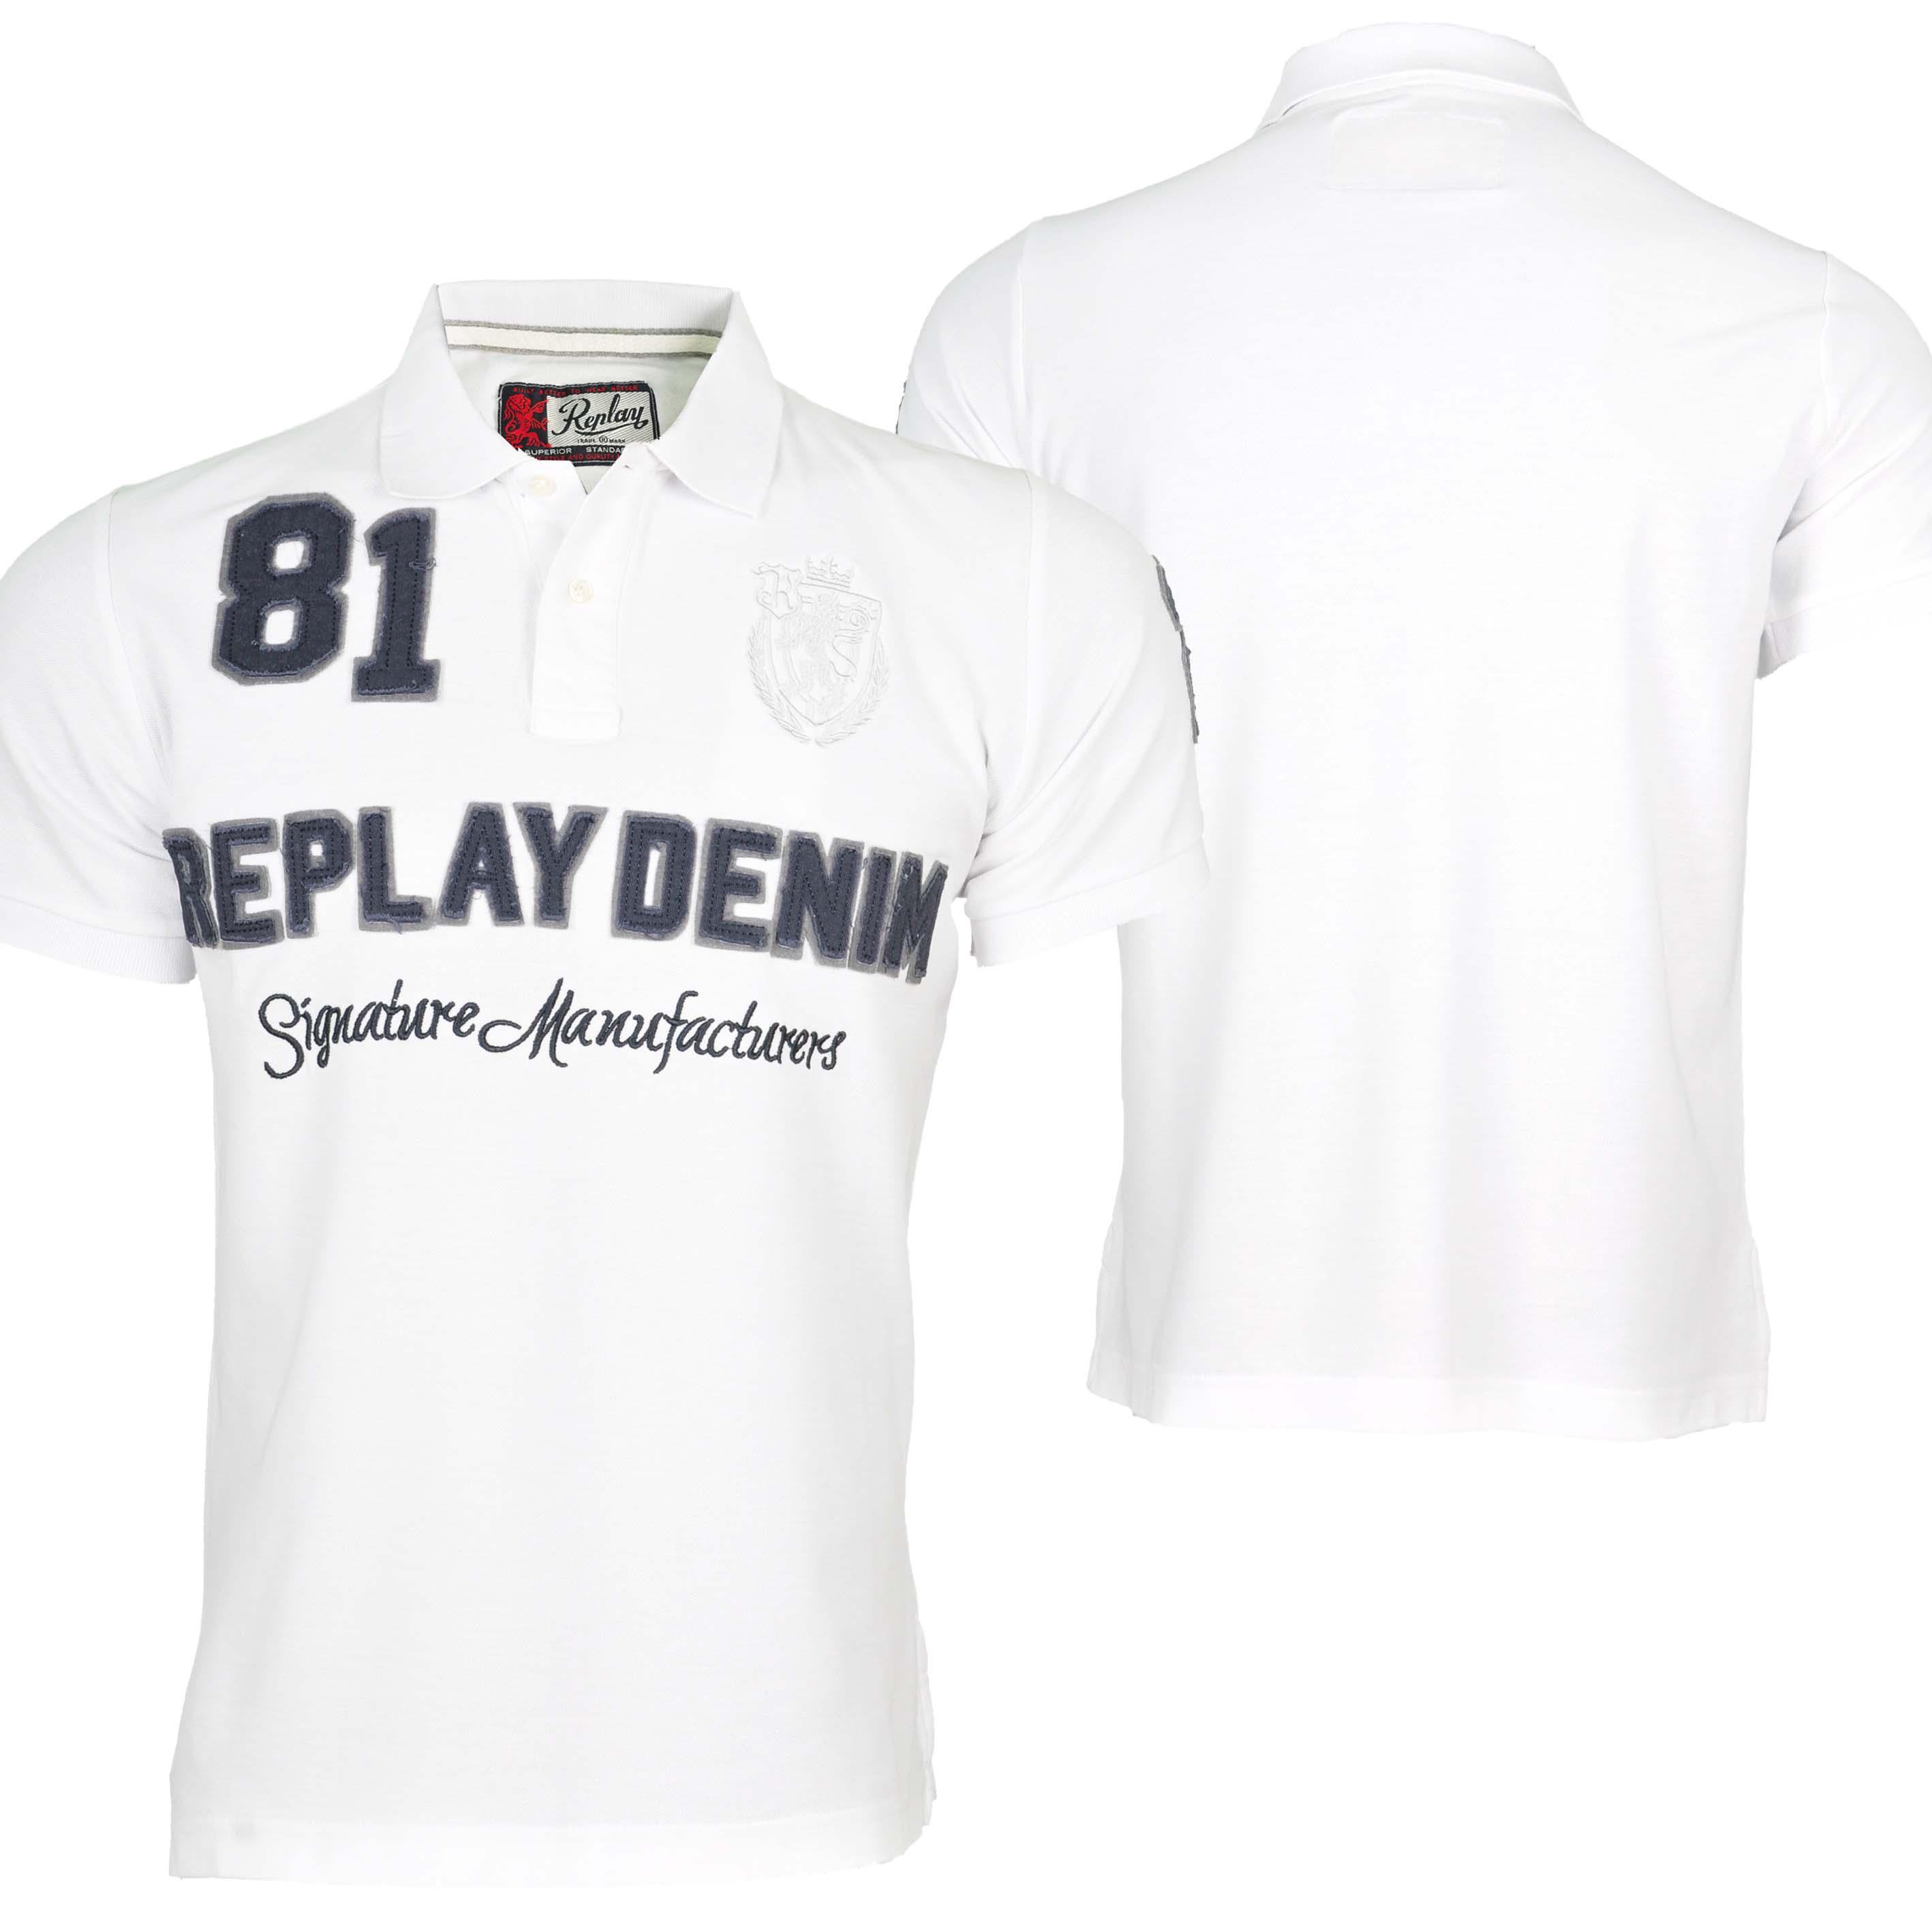 Foto Replay Signature Manufacturers Camiseta Polo Blanco foto 133043